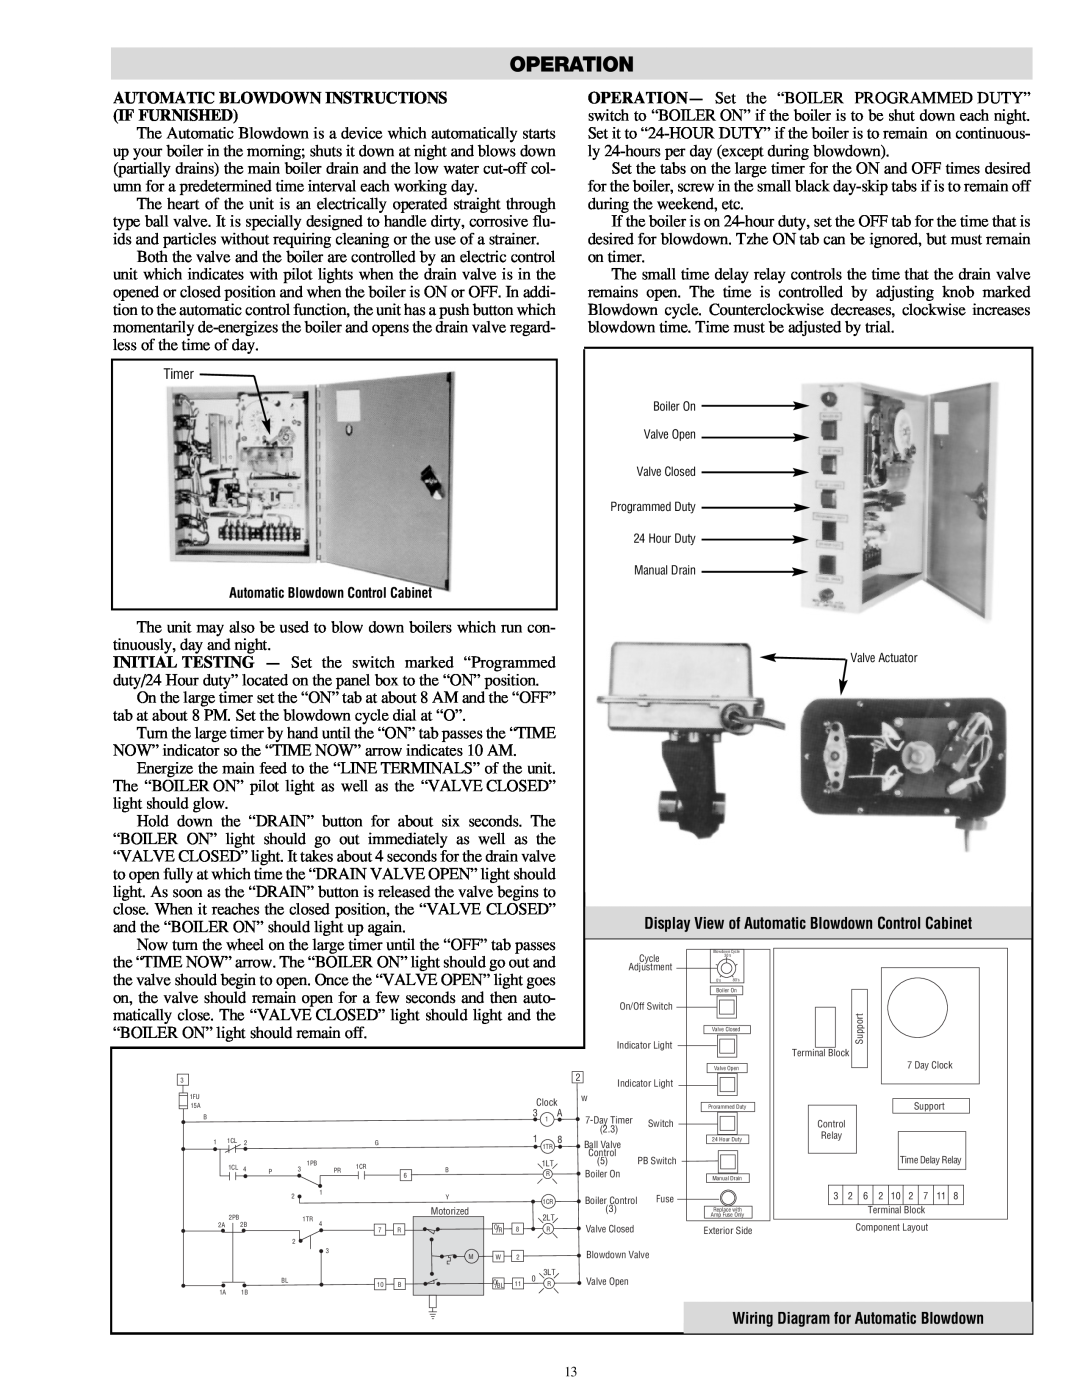 Chromalox CHPES-6A manual Automatic Blowdown Instructions, If Furnished, Operation 